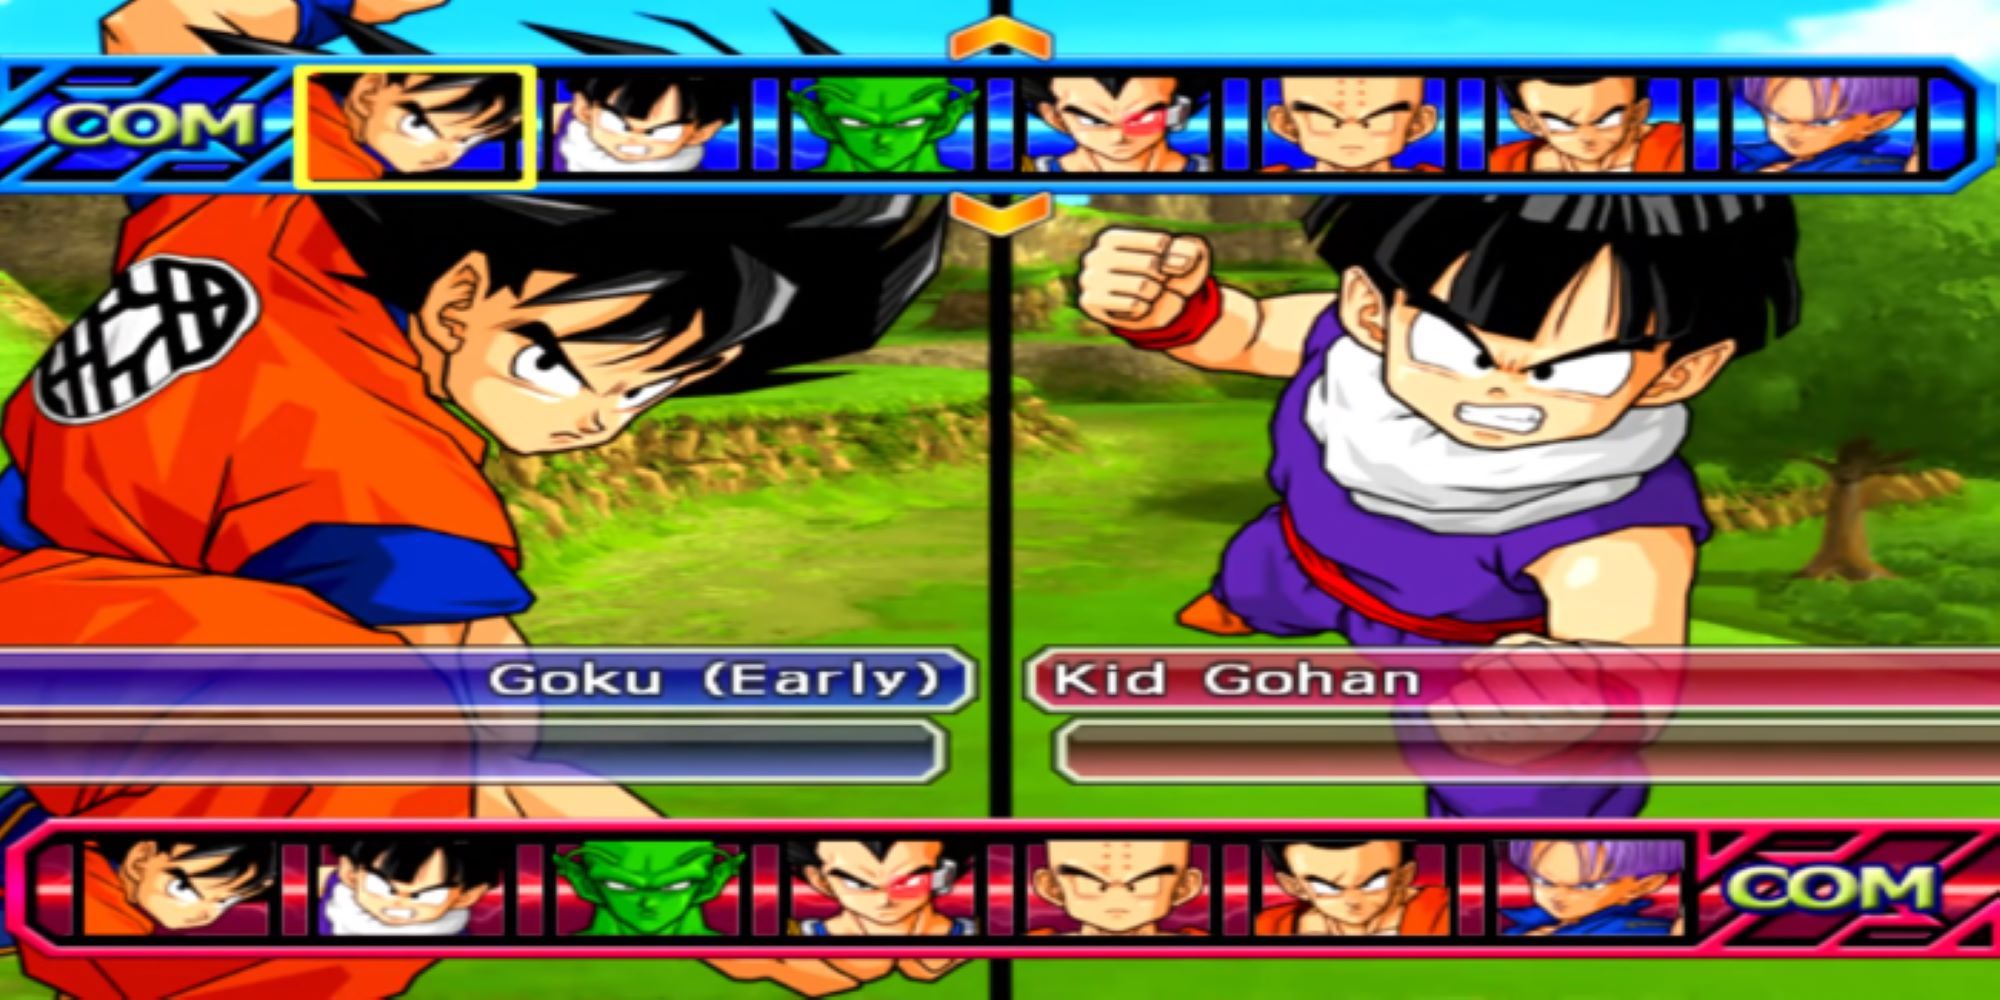 Dragon Ball Z Budokai Tenkaichi 3 Roster in Character Select VS Mode